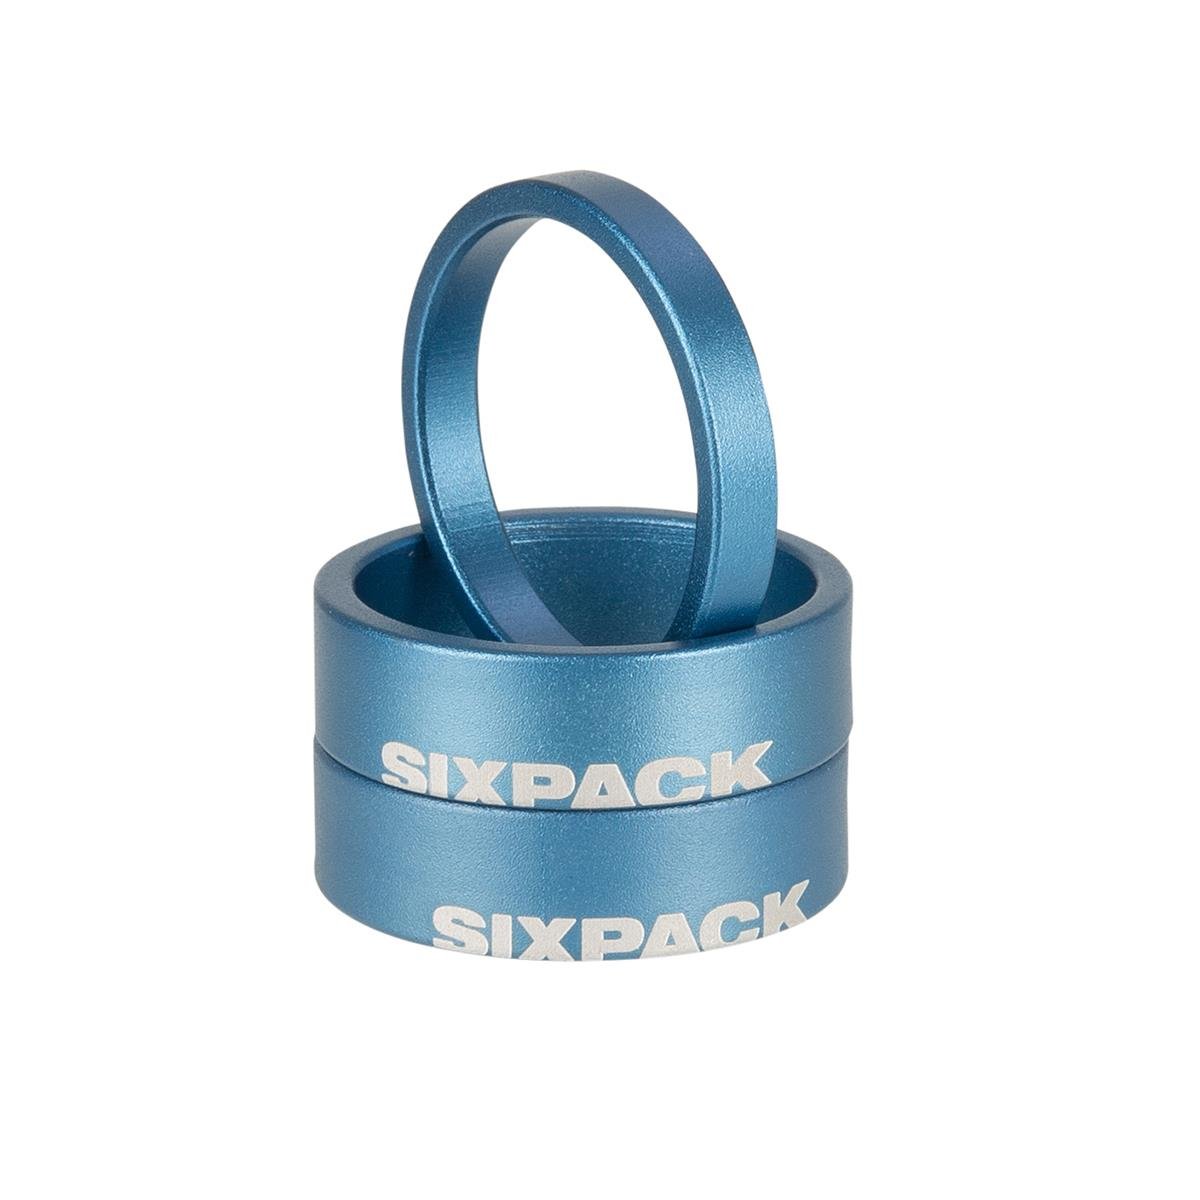 Sixpack Head Set Spacer Set Menace Blue, 1 1/8 Inches, 3 Parts